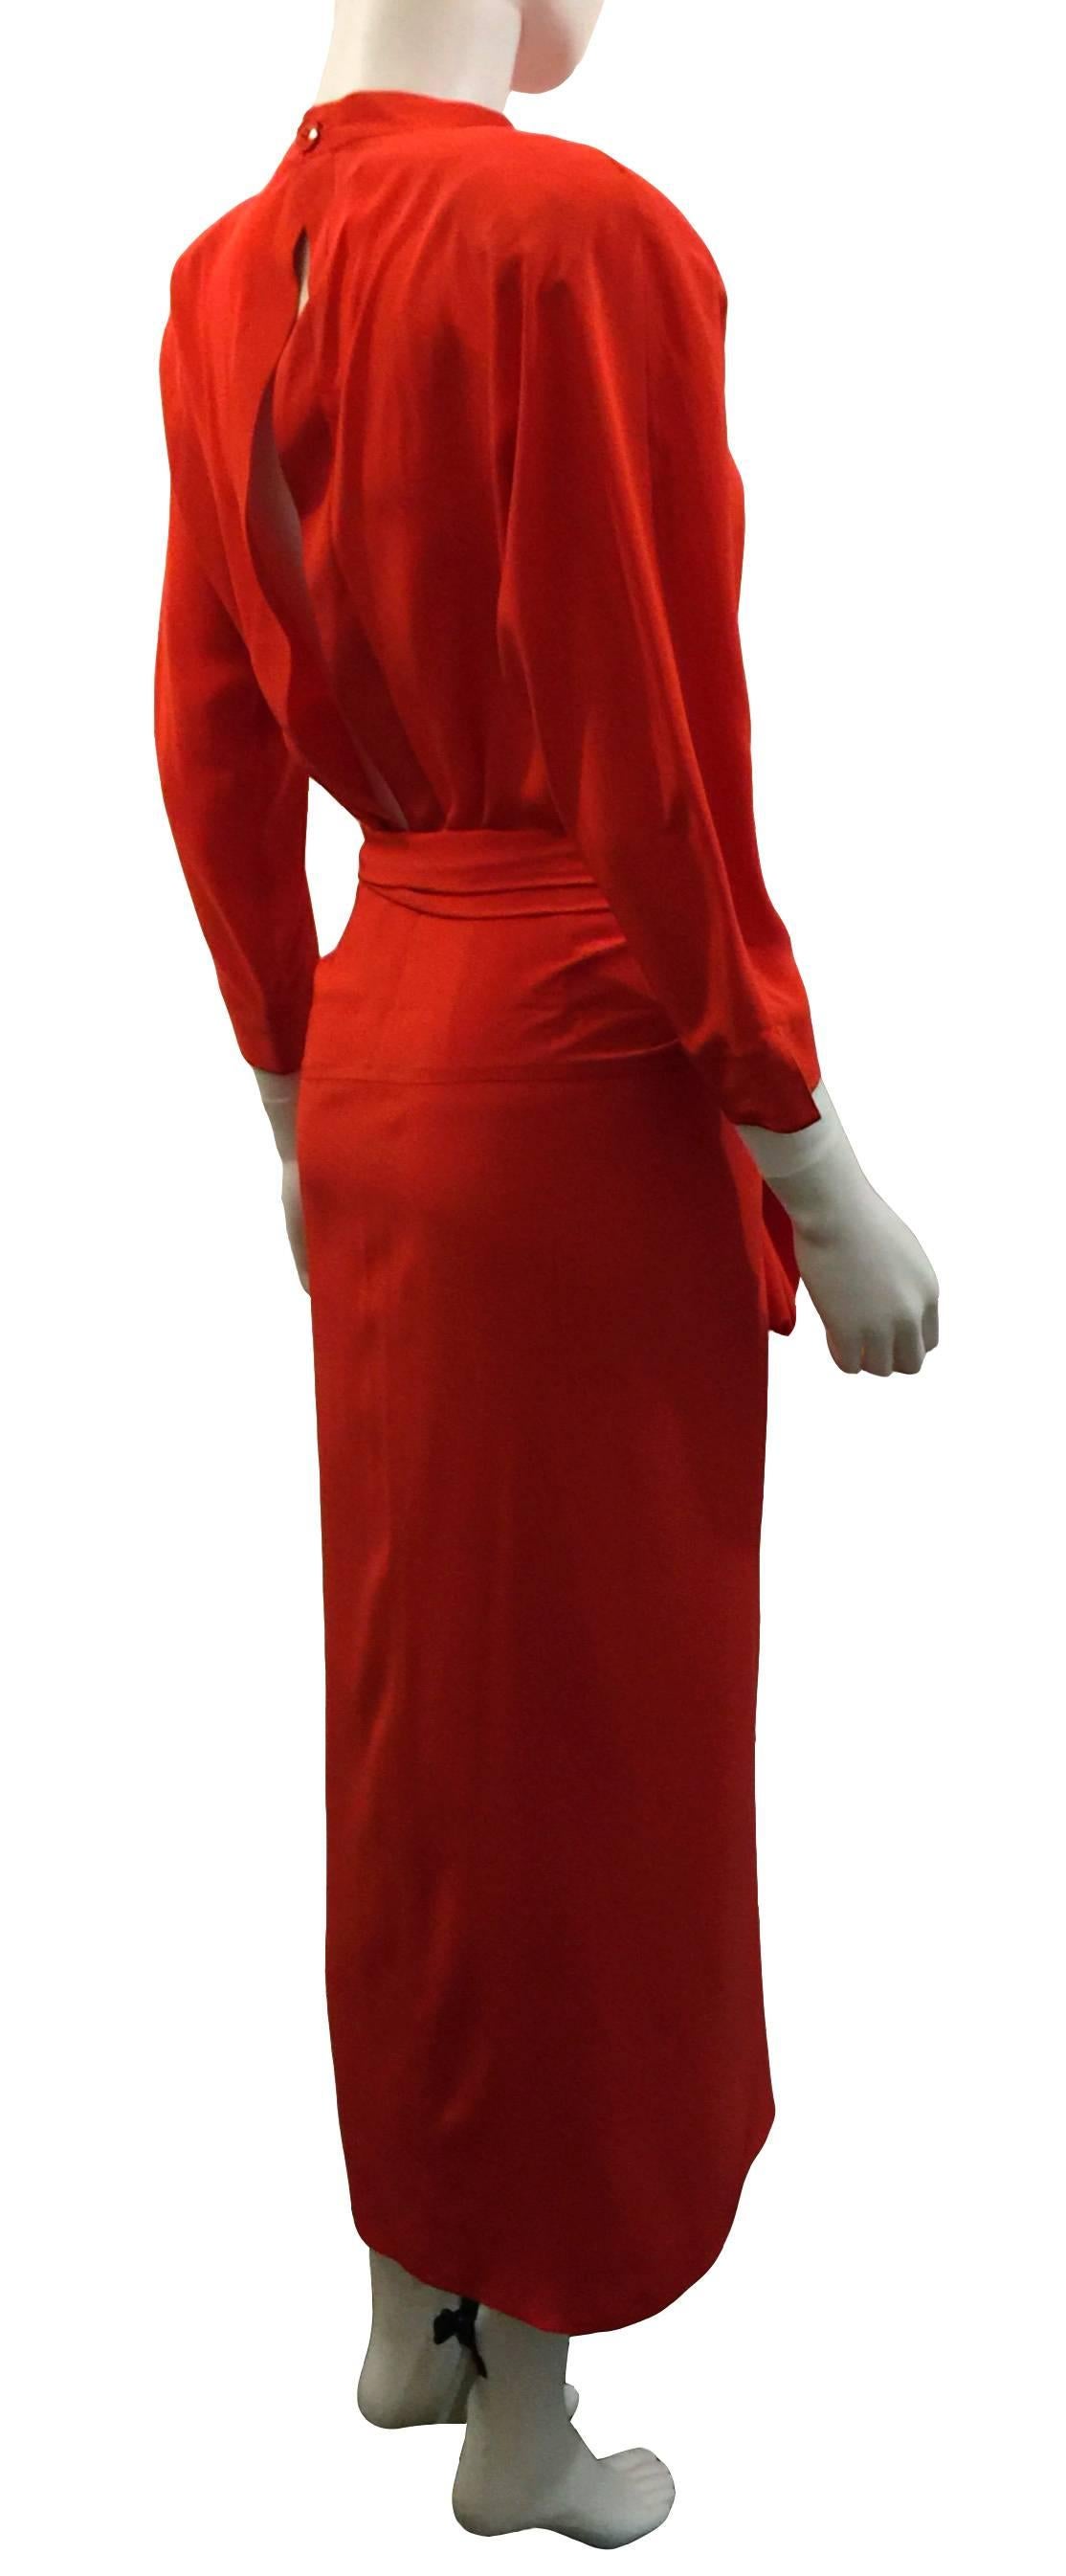 Red Gianfranco Ferré Vintage Dress